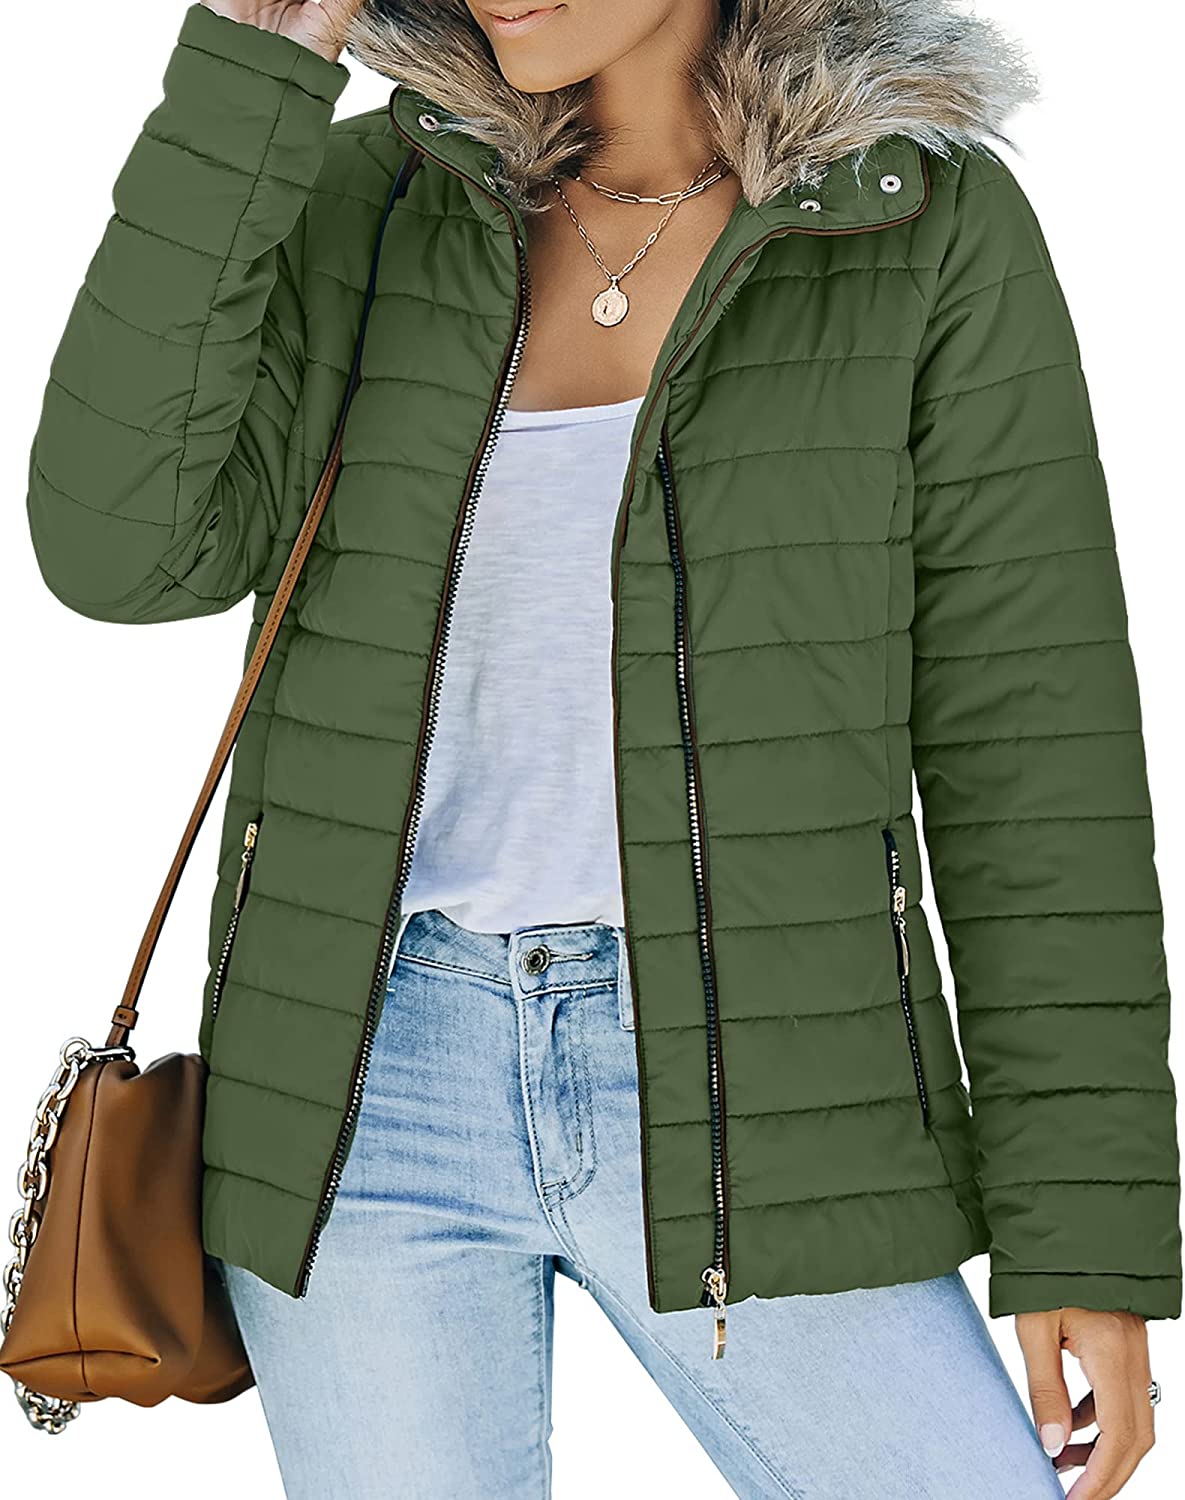 Uqnaivs Womens Winter Quilted Jacket Faux Fur Collar Zip Up Parka Puffer  Coat